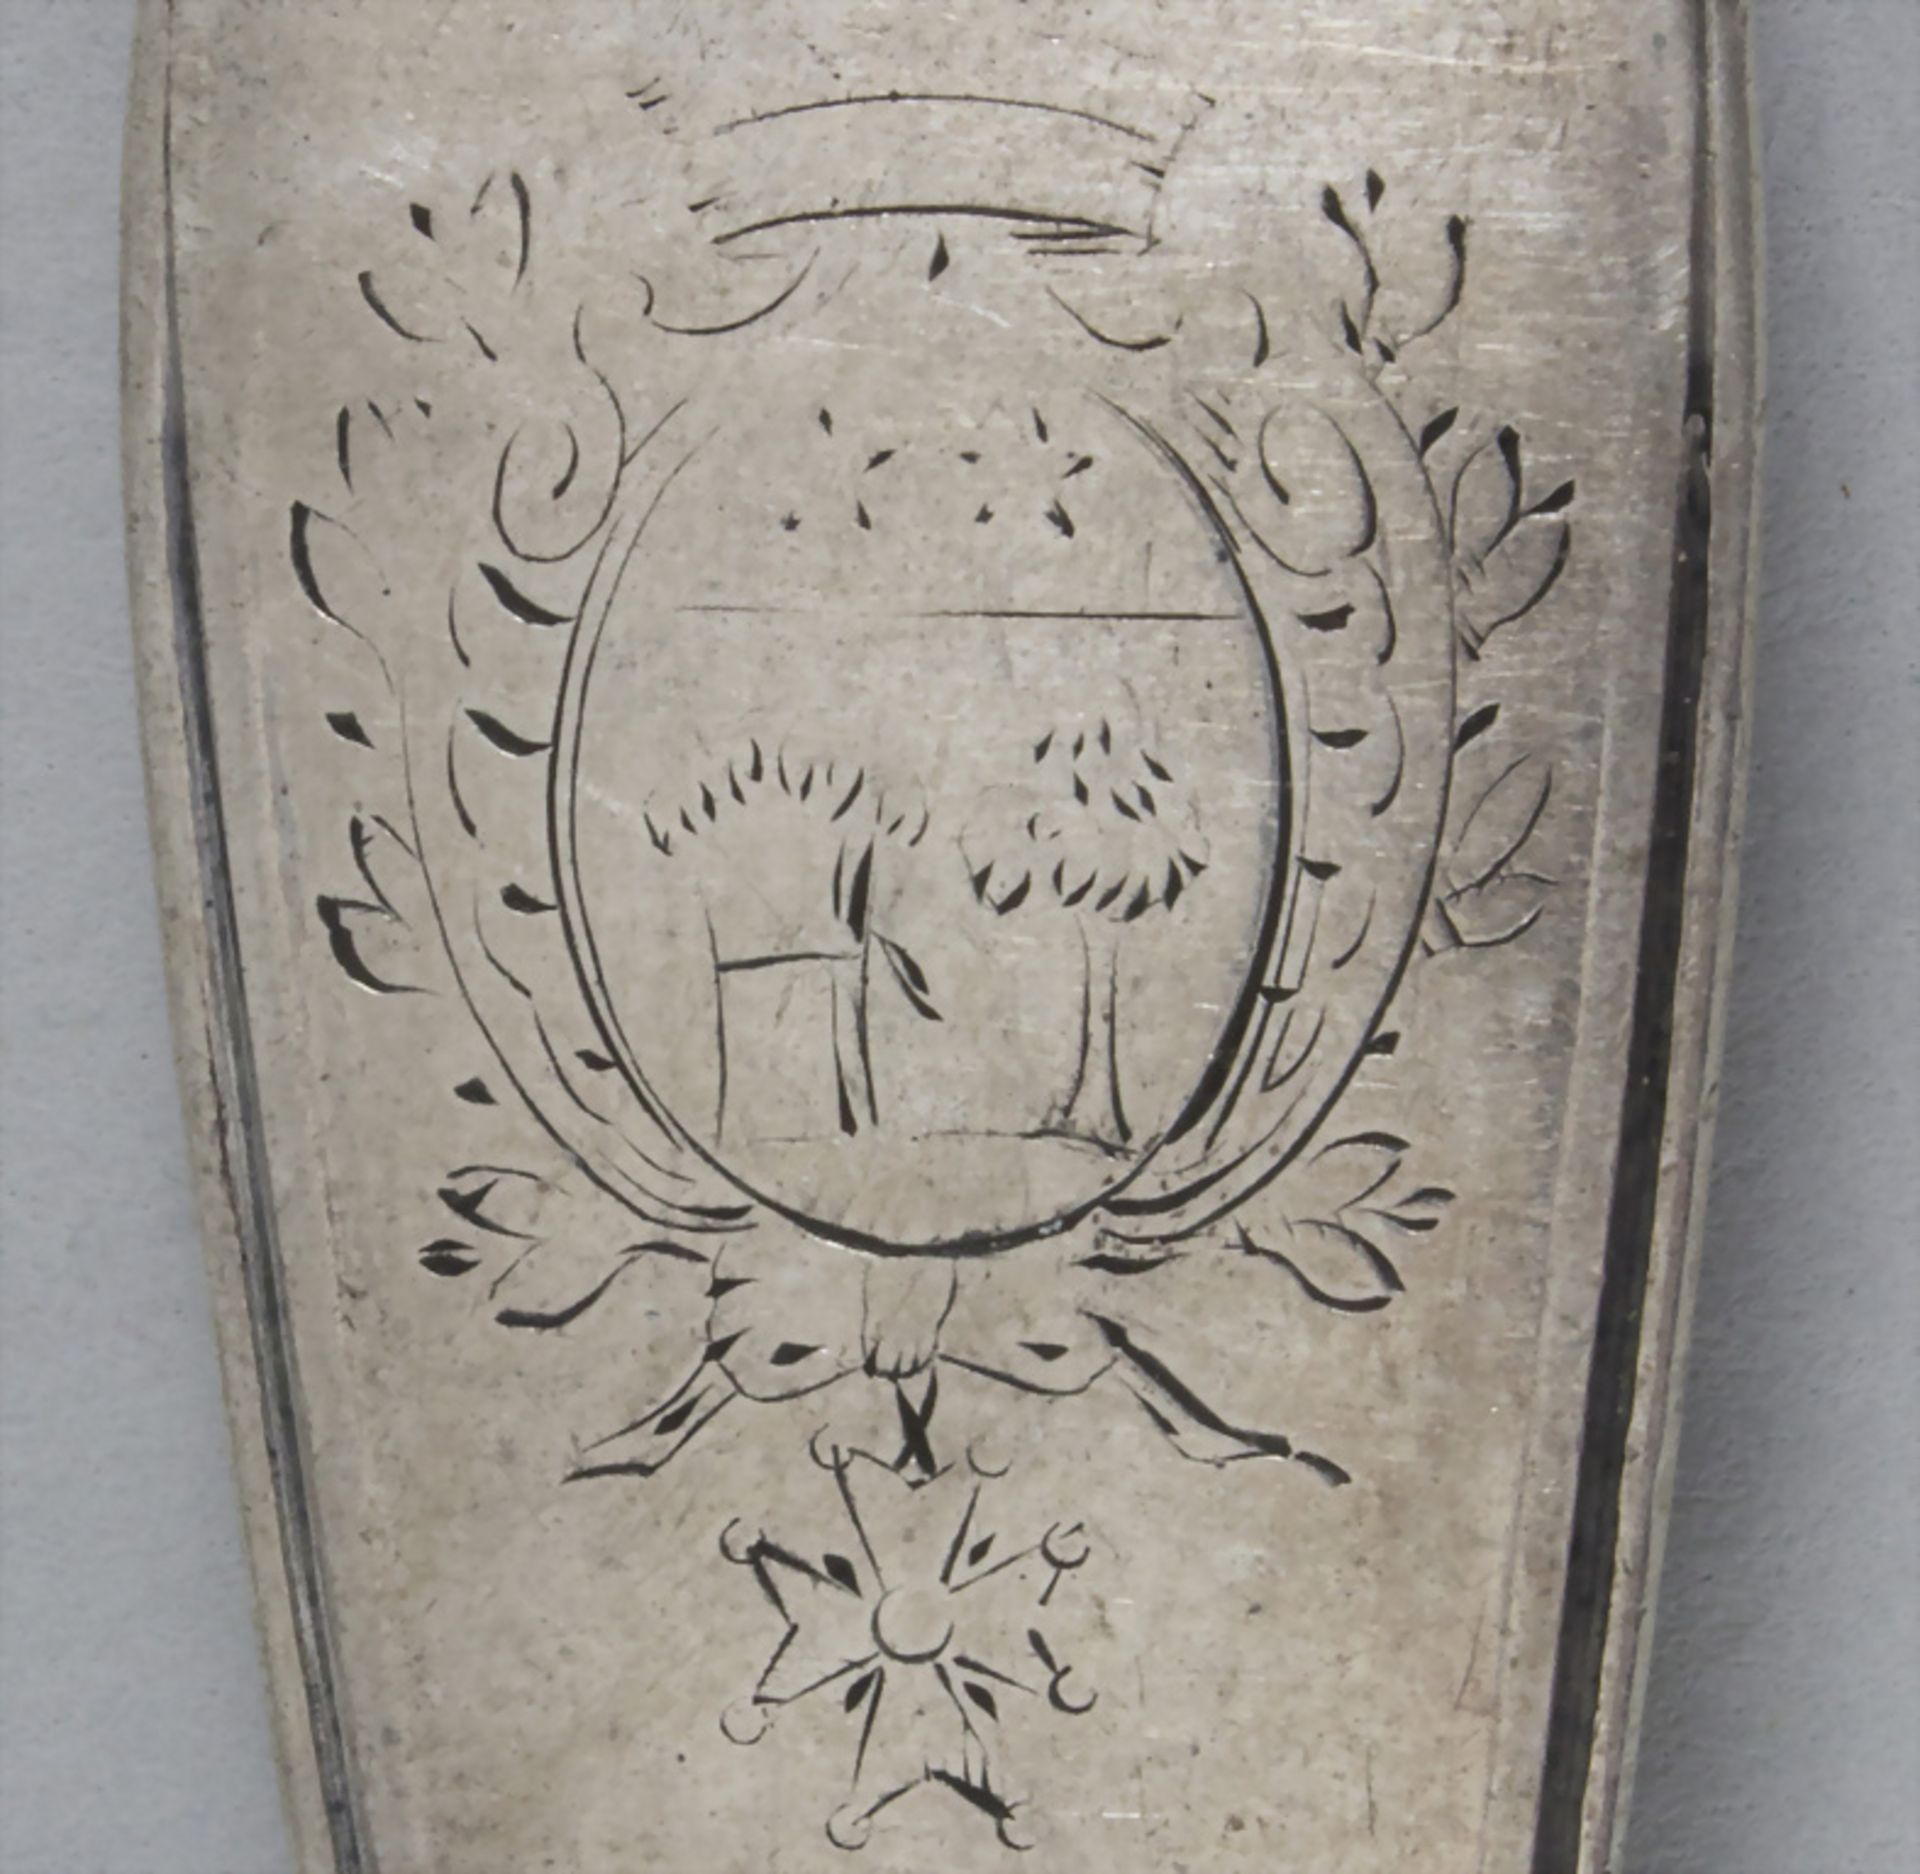 25 tlg. Silberbesteck / 25 pieces of silver cutlery, Imlin, Straßburg / Strasbourg, 1778 - Image 5 of 6